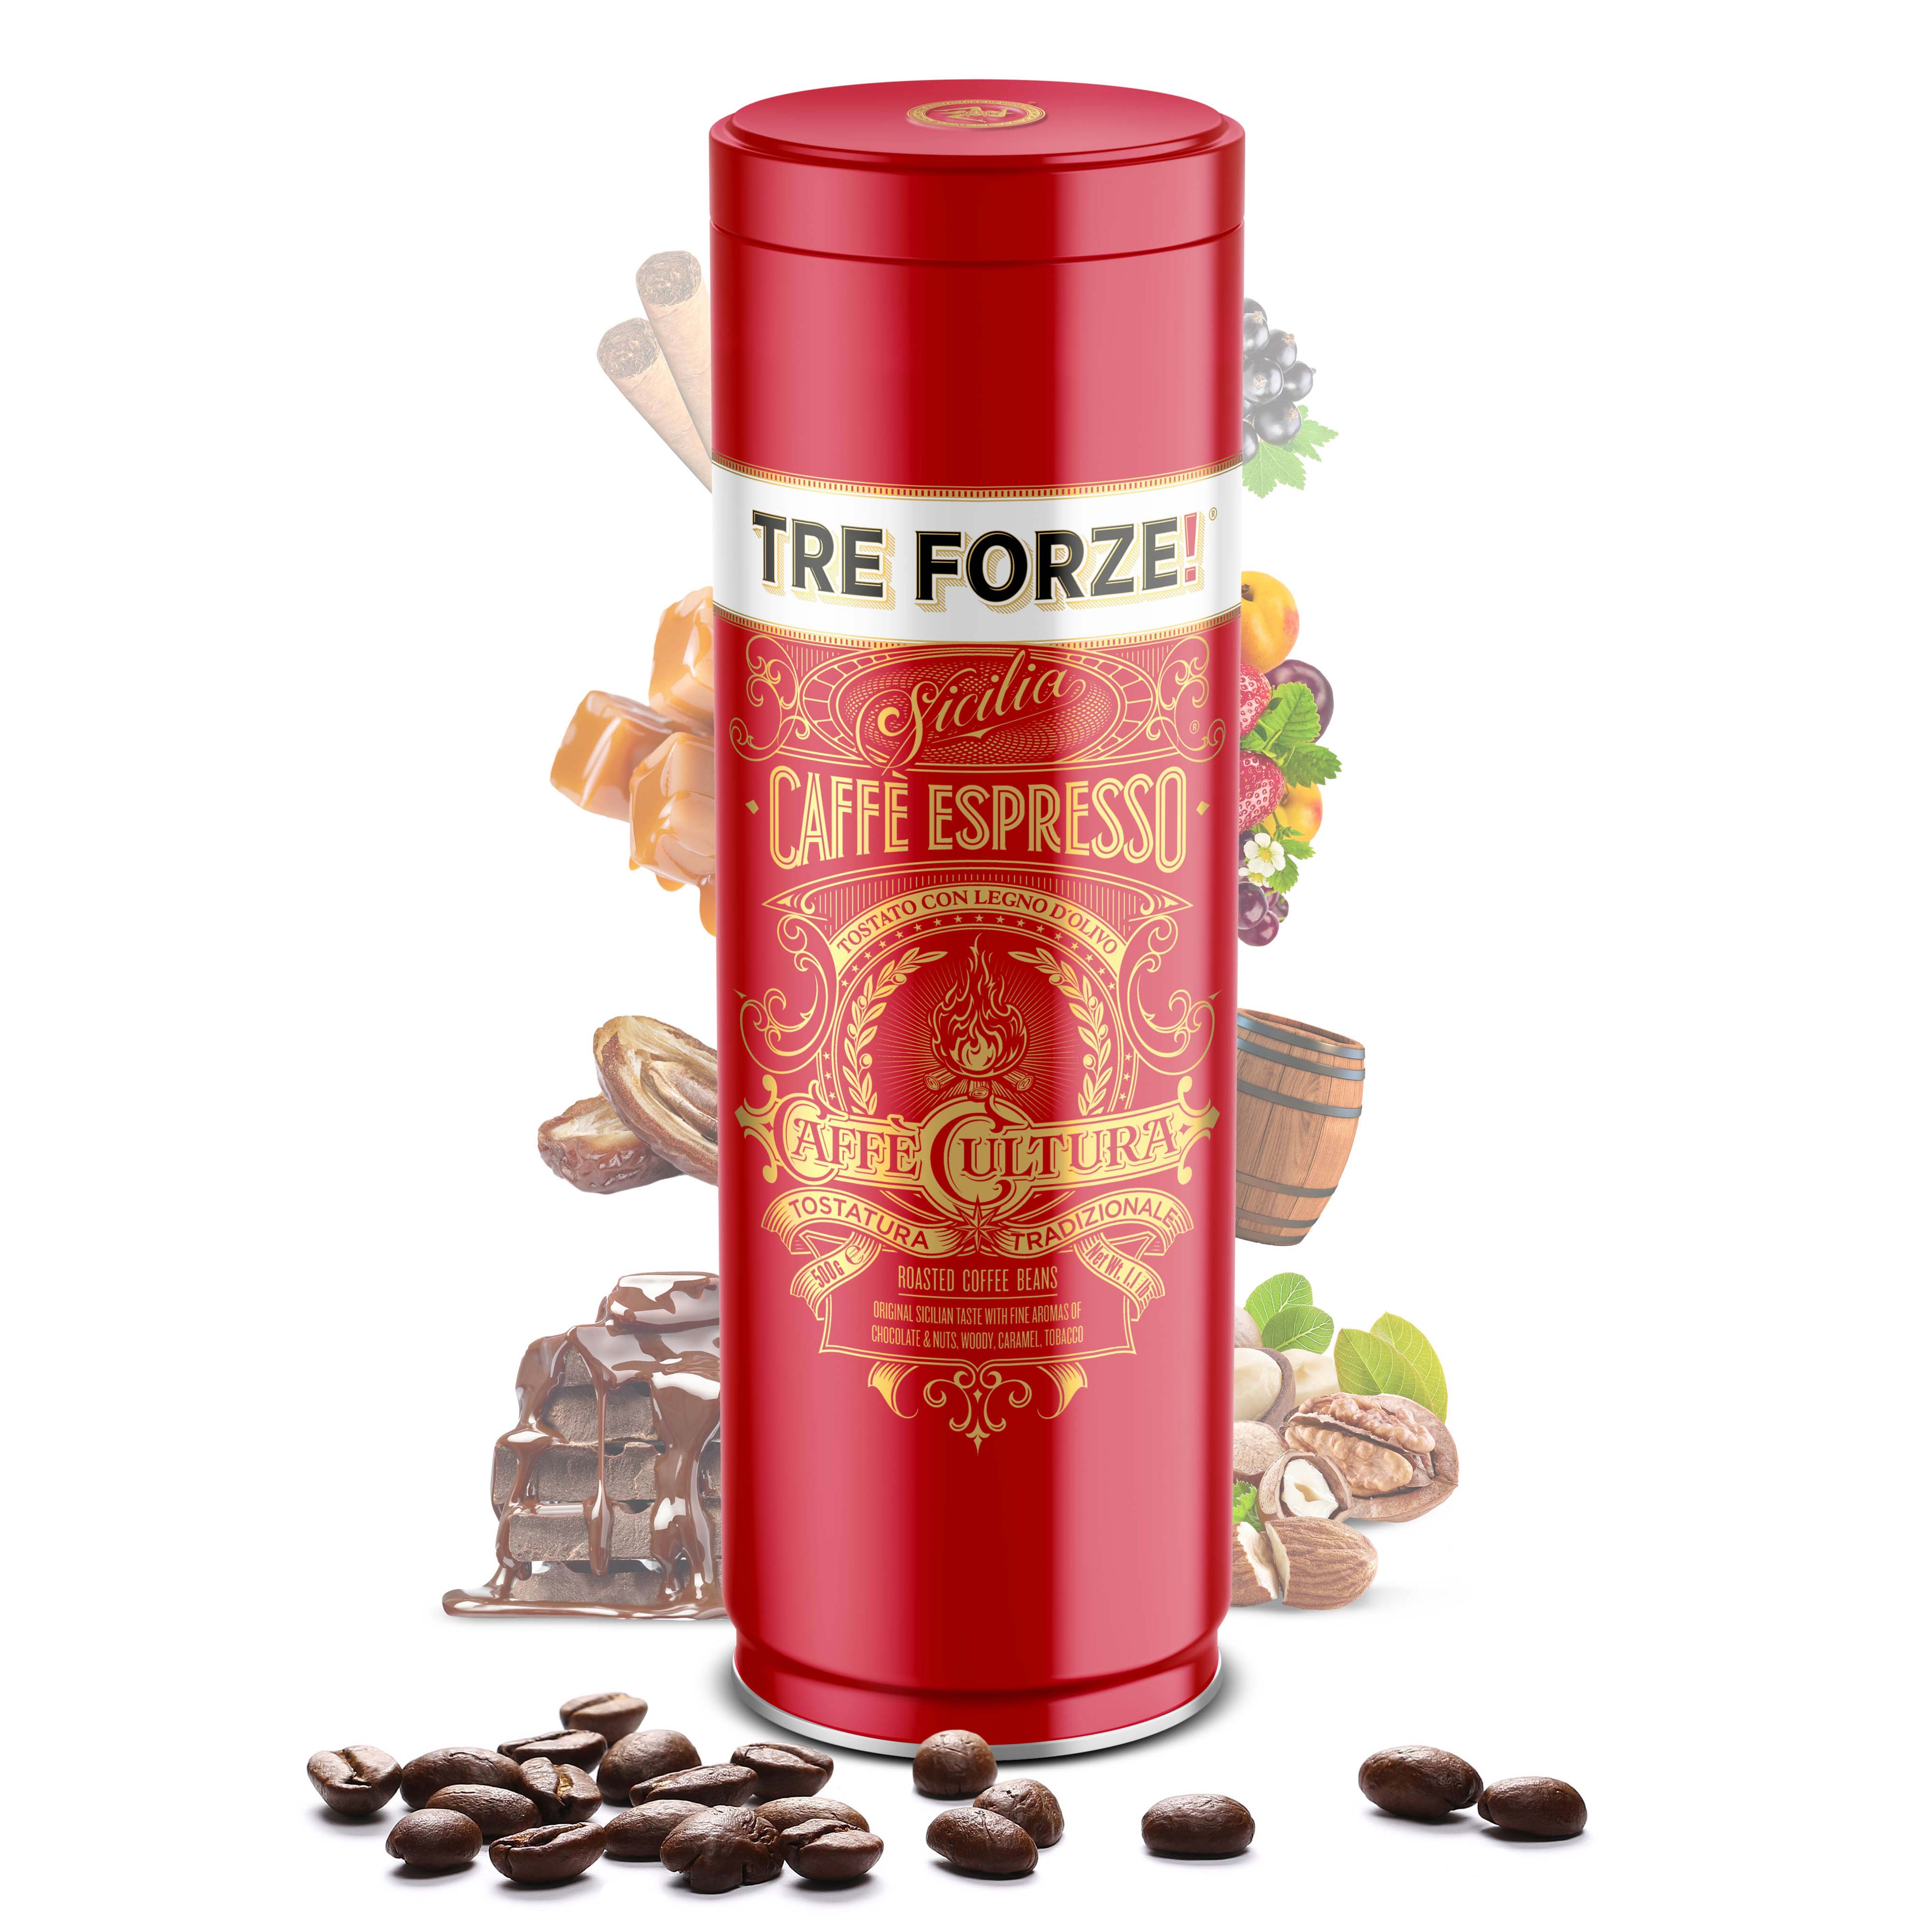 TRE FORZE! - Caffè Espresso - 500g Bohnen